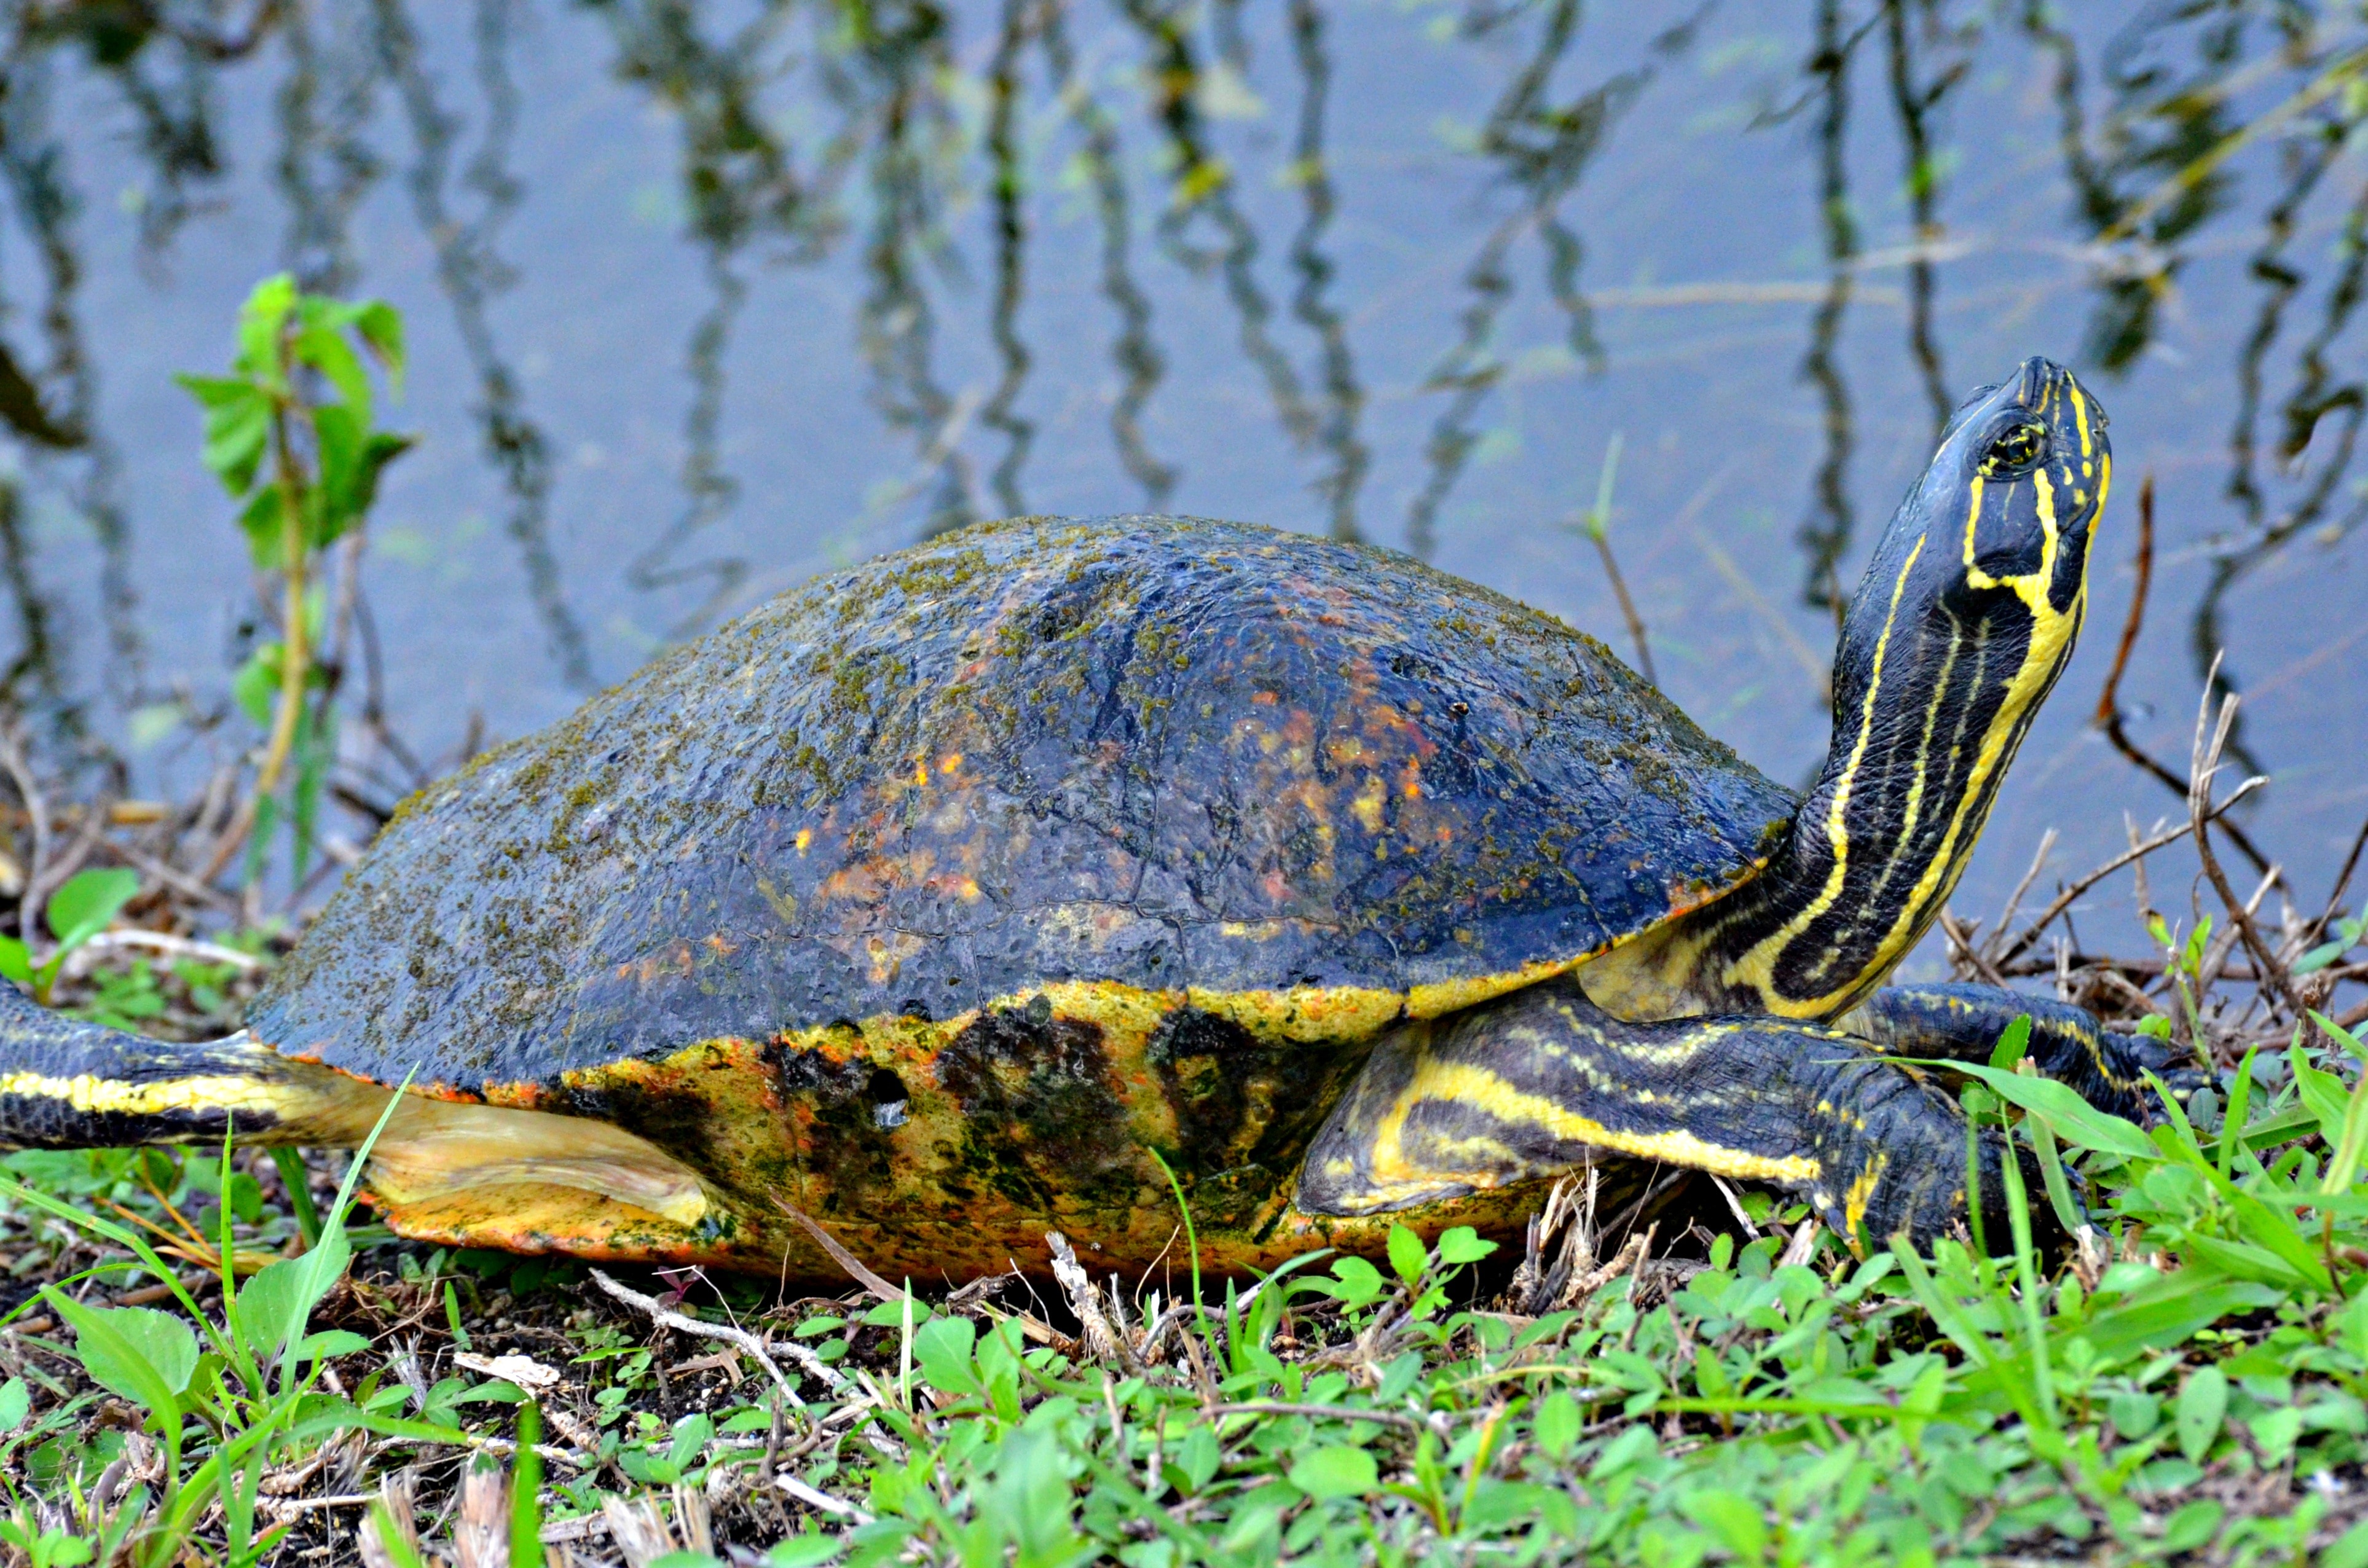 Everglades National Park, Tortoise, one animal, reptile